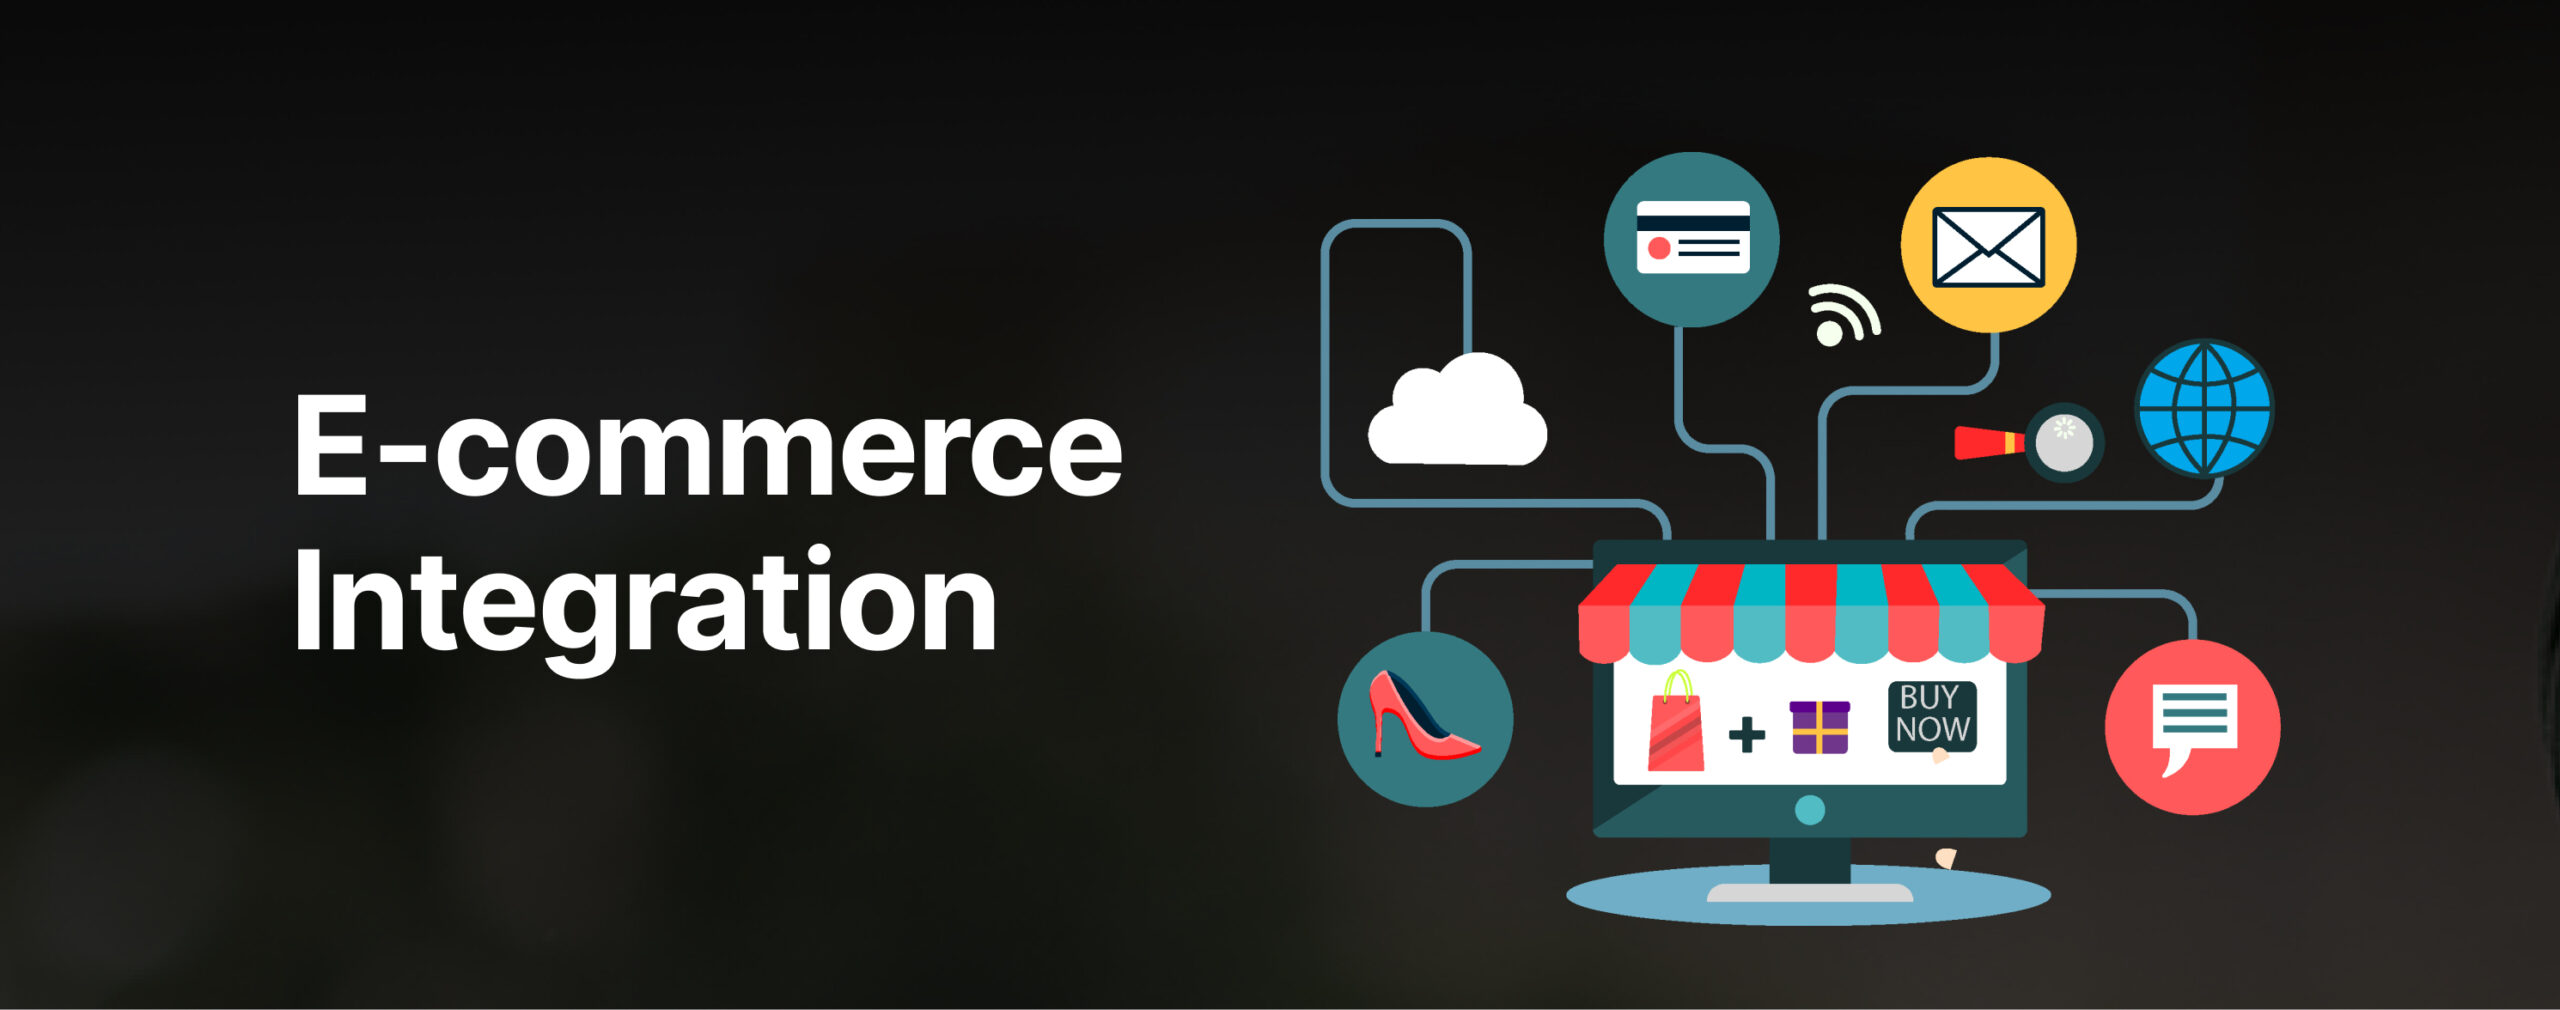 E-commerce-Integration